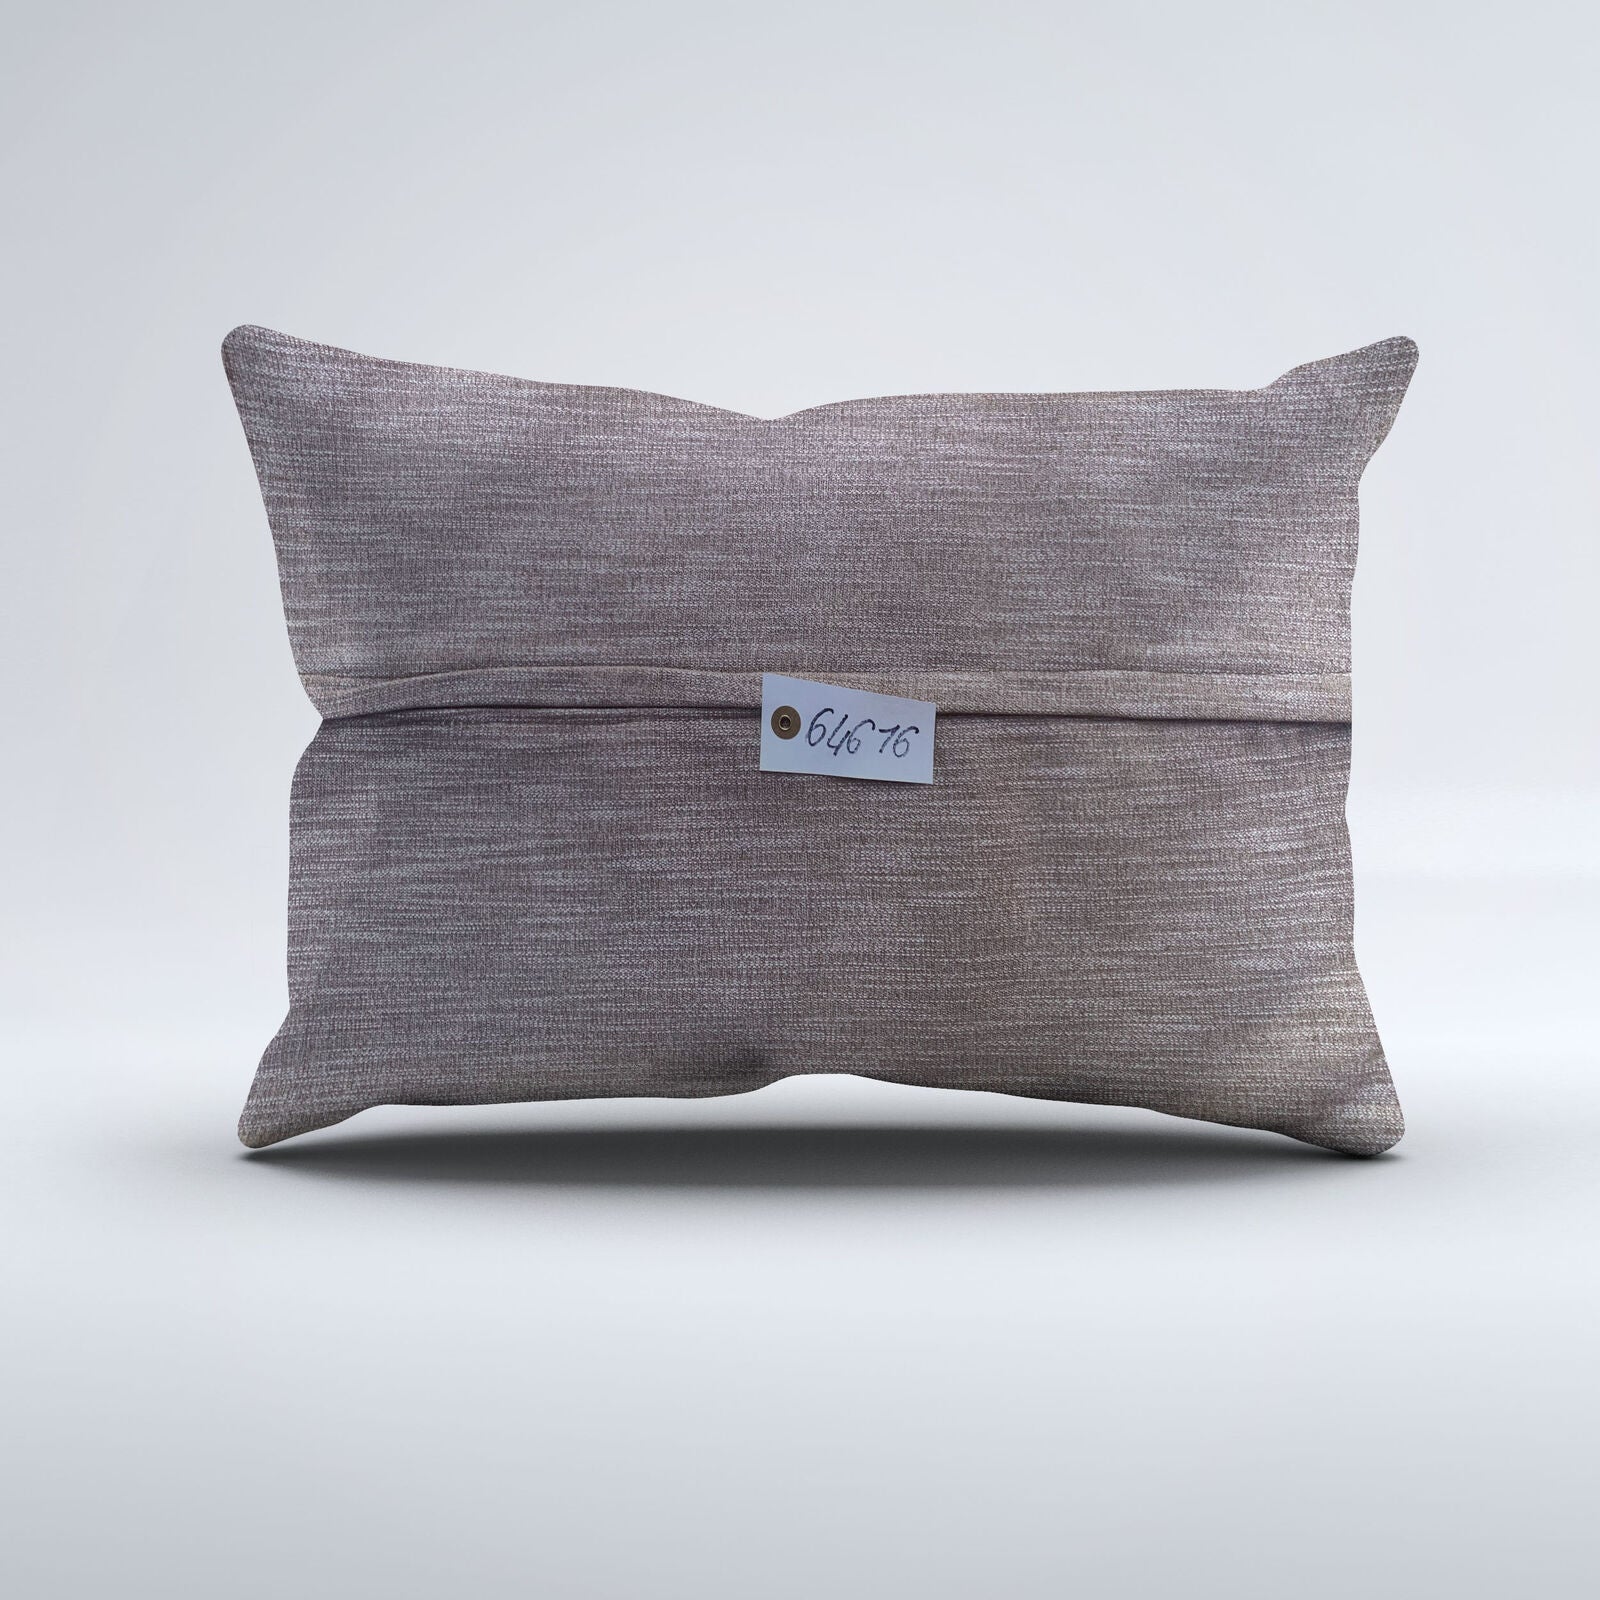 Vintage Turkish Kilim Cushion Cover 60x40 cm Square Wool Kelim Pillowcase 64676